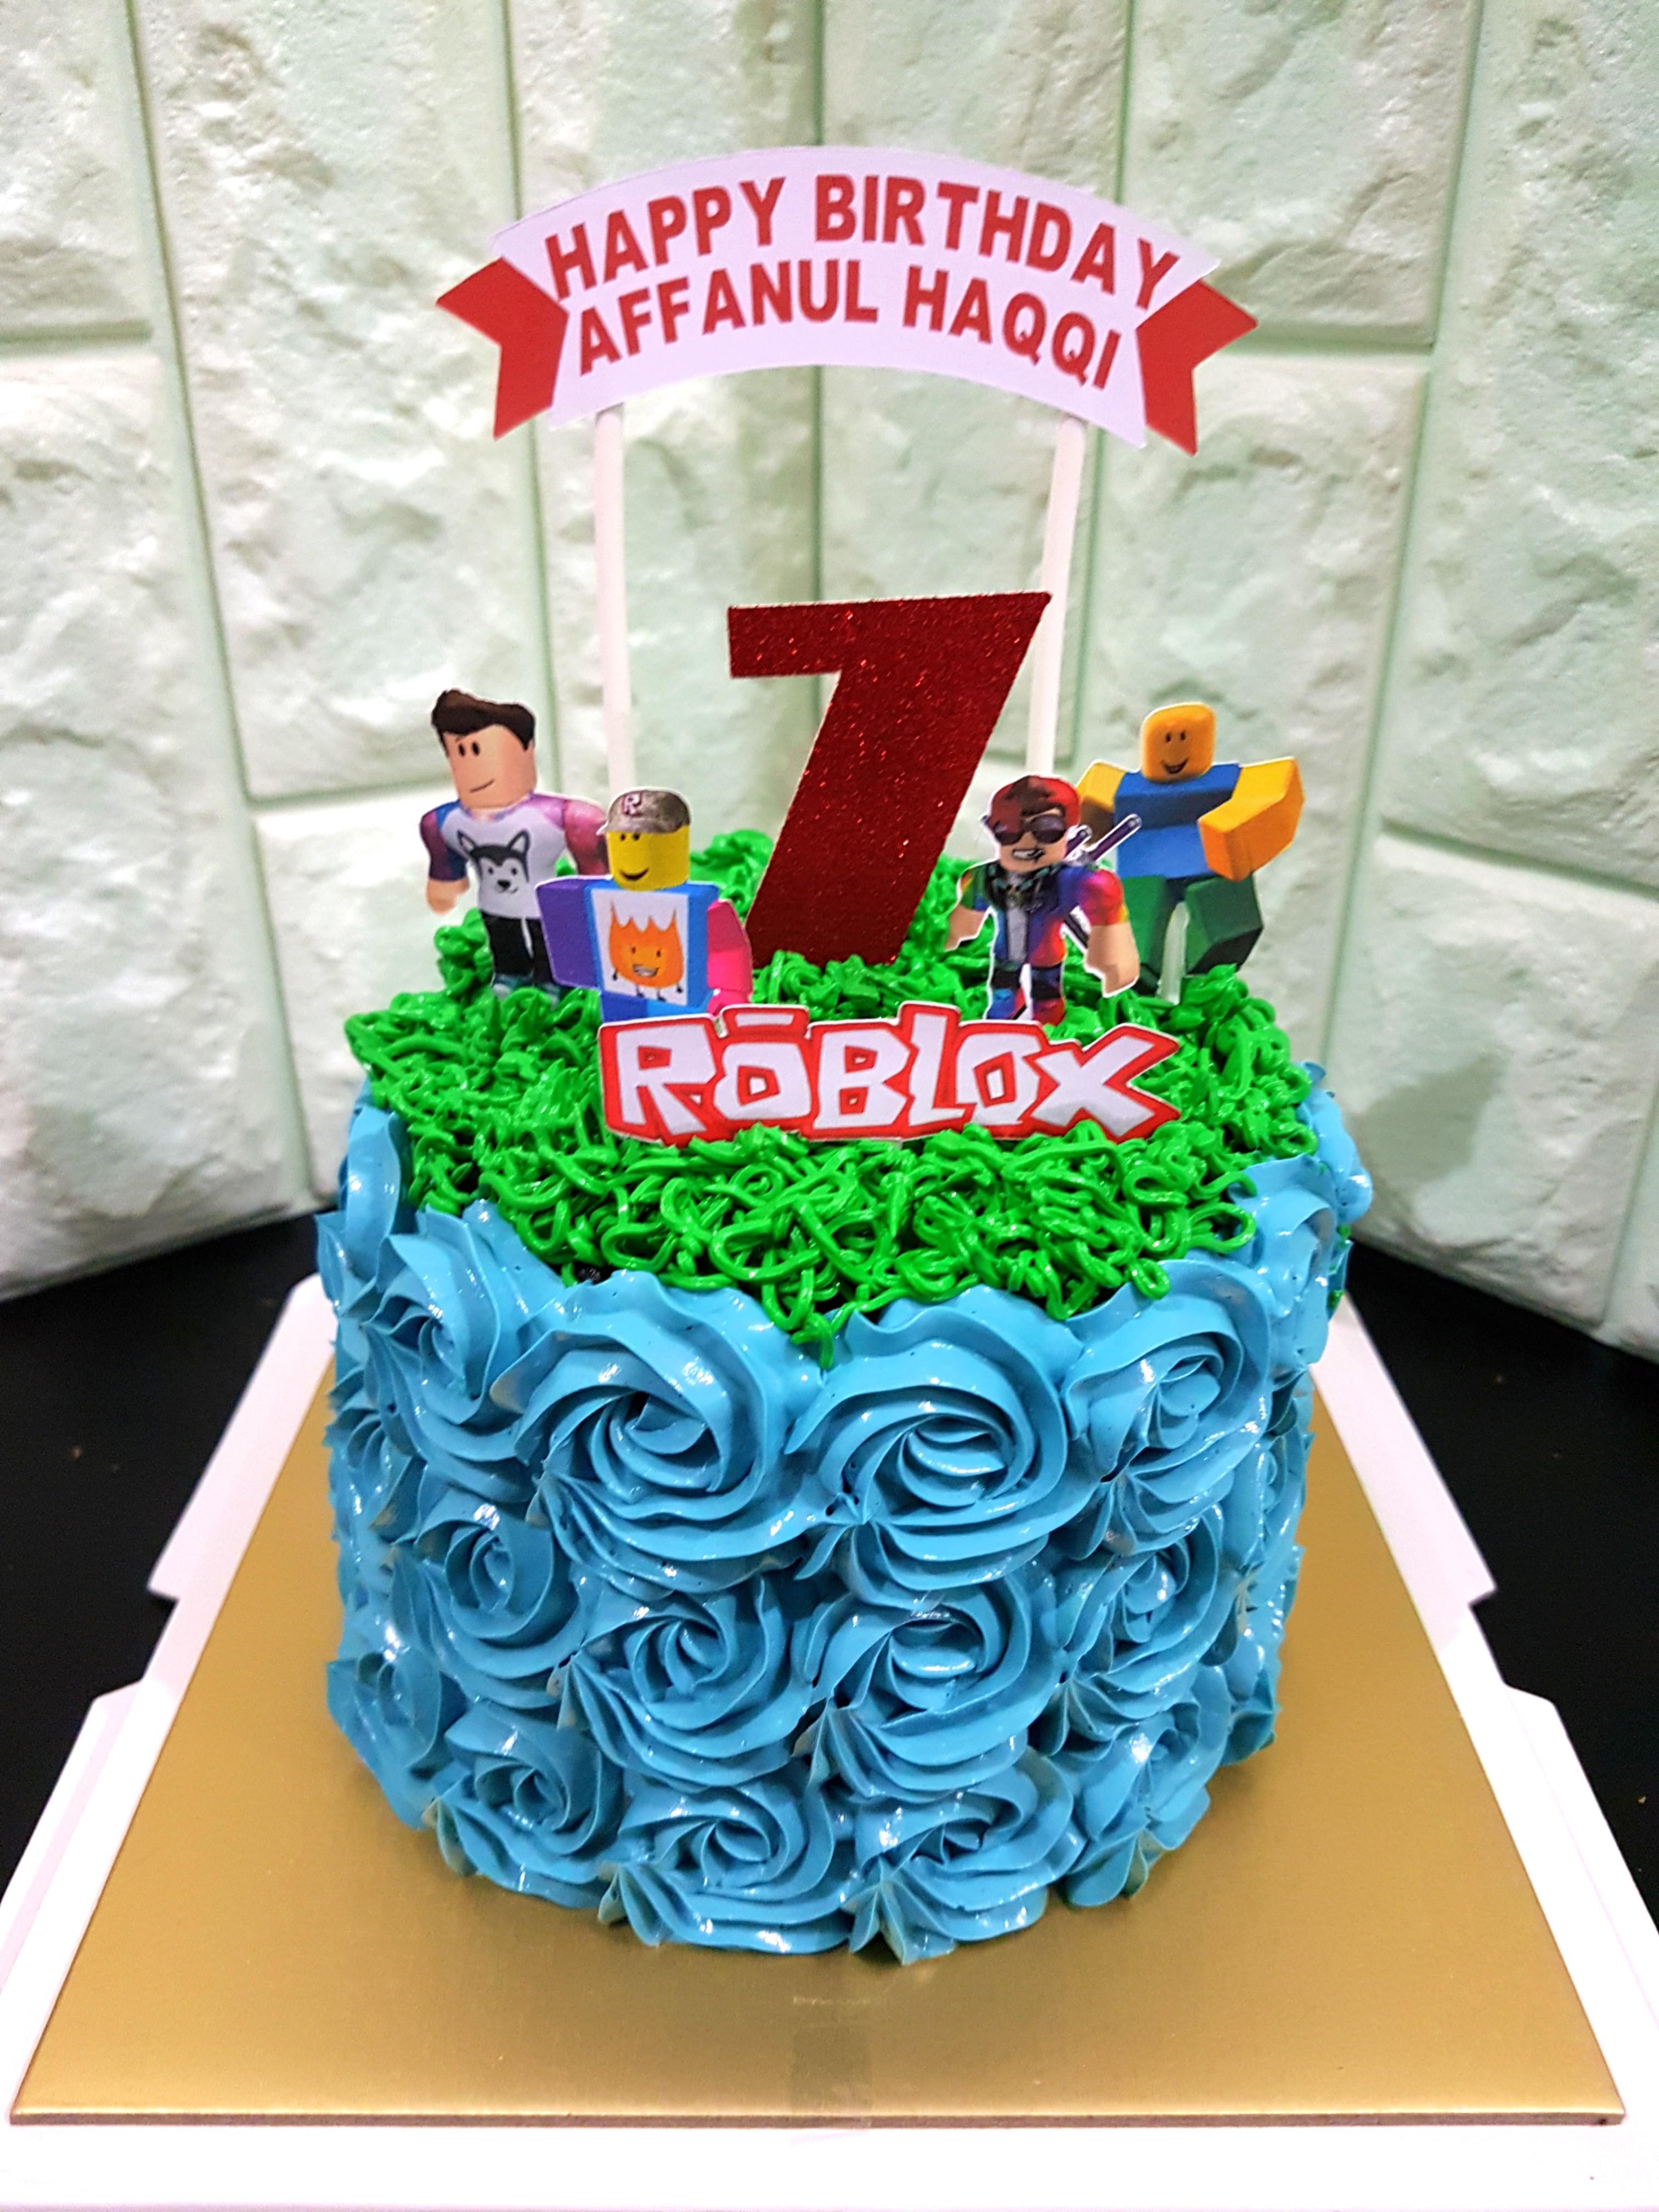 Roblox Cake - roblox cake design buttercream